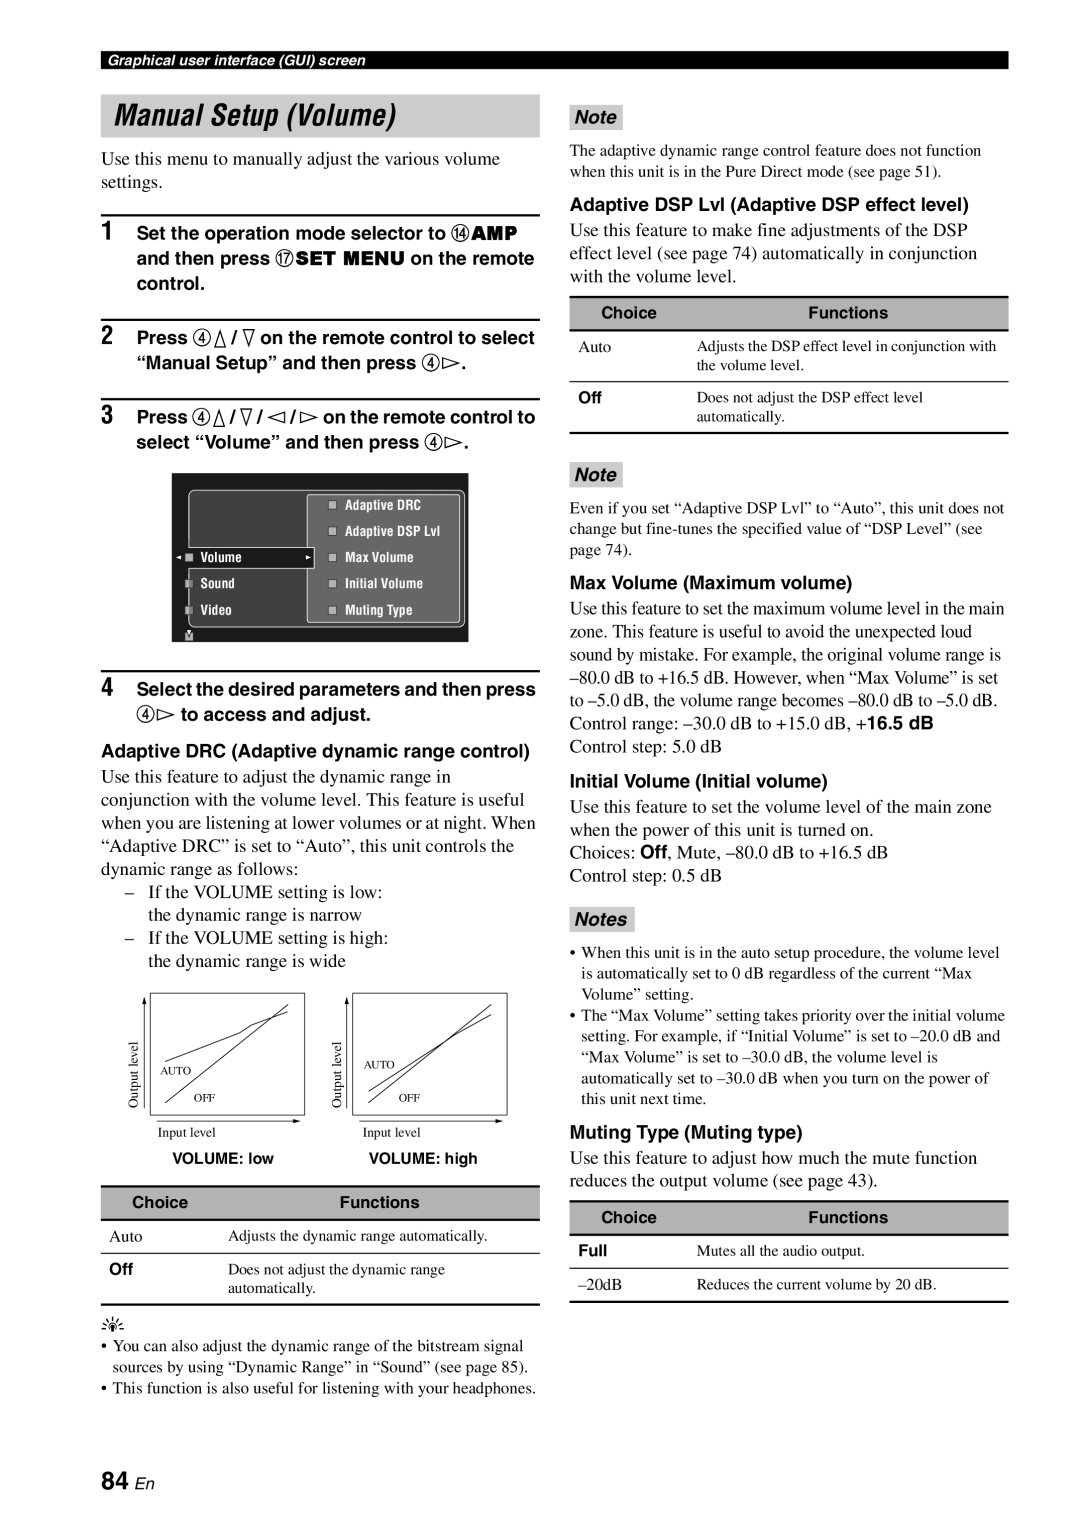 Yamaha RX-V3800 Manual Setup Volume, 84 En, Adaptive DRC Adaptive dynamic range control, Max Volume Maximum volume 